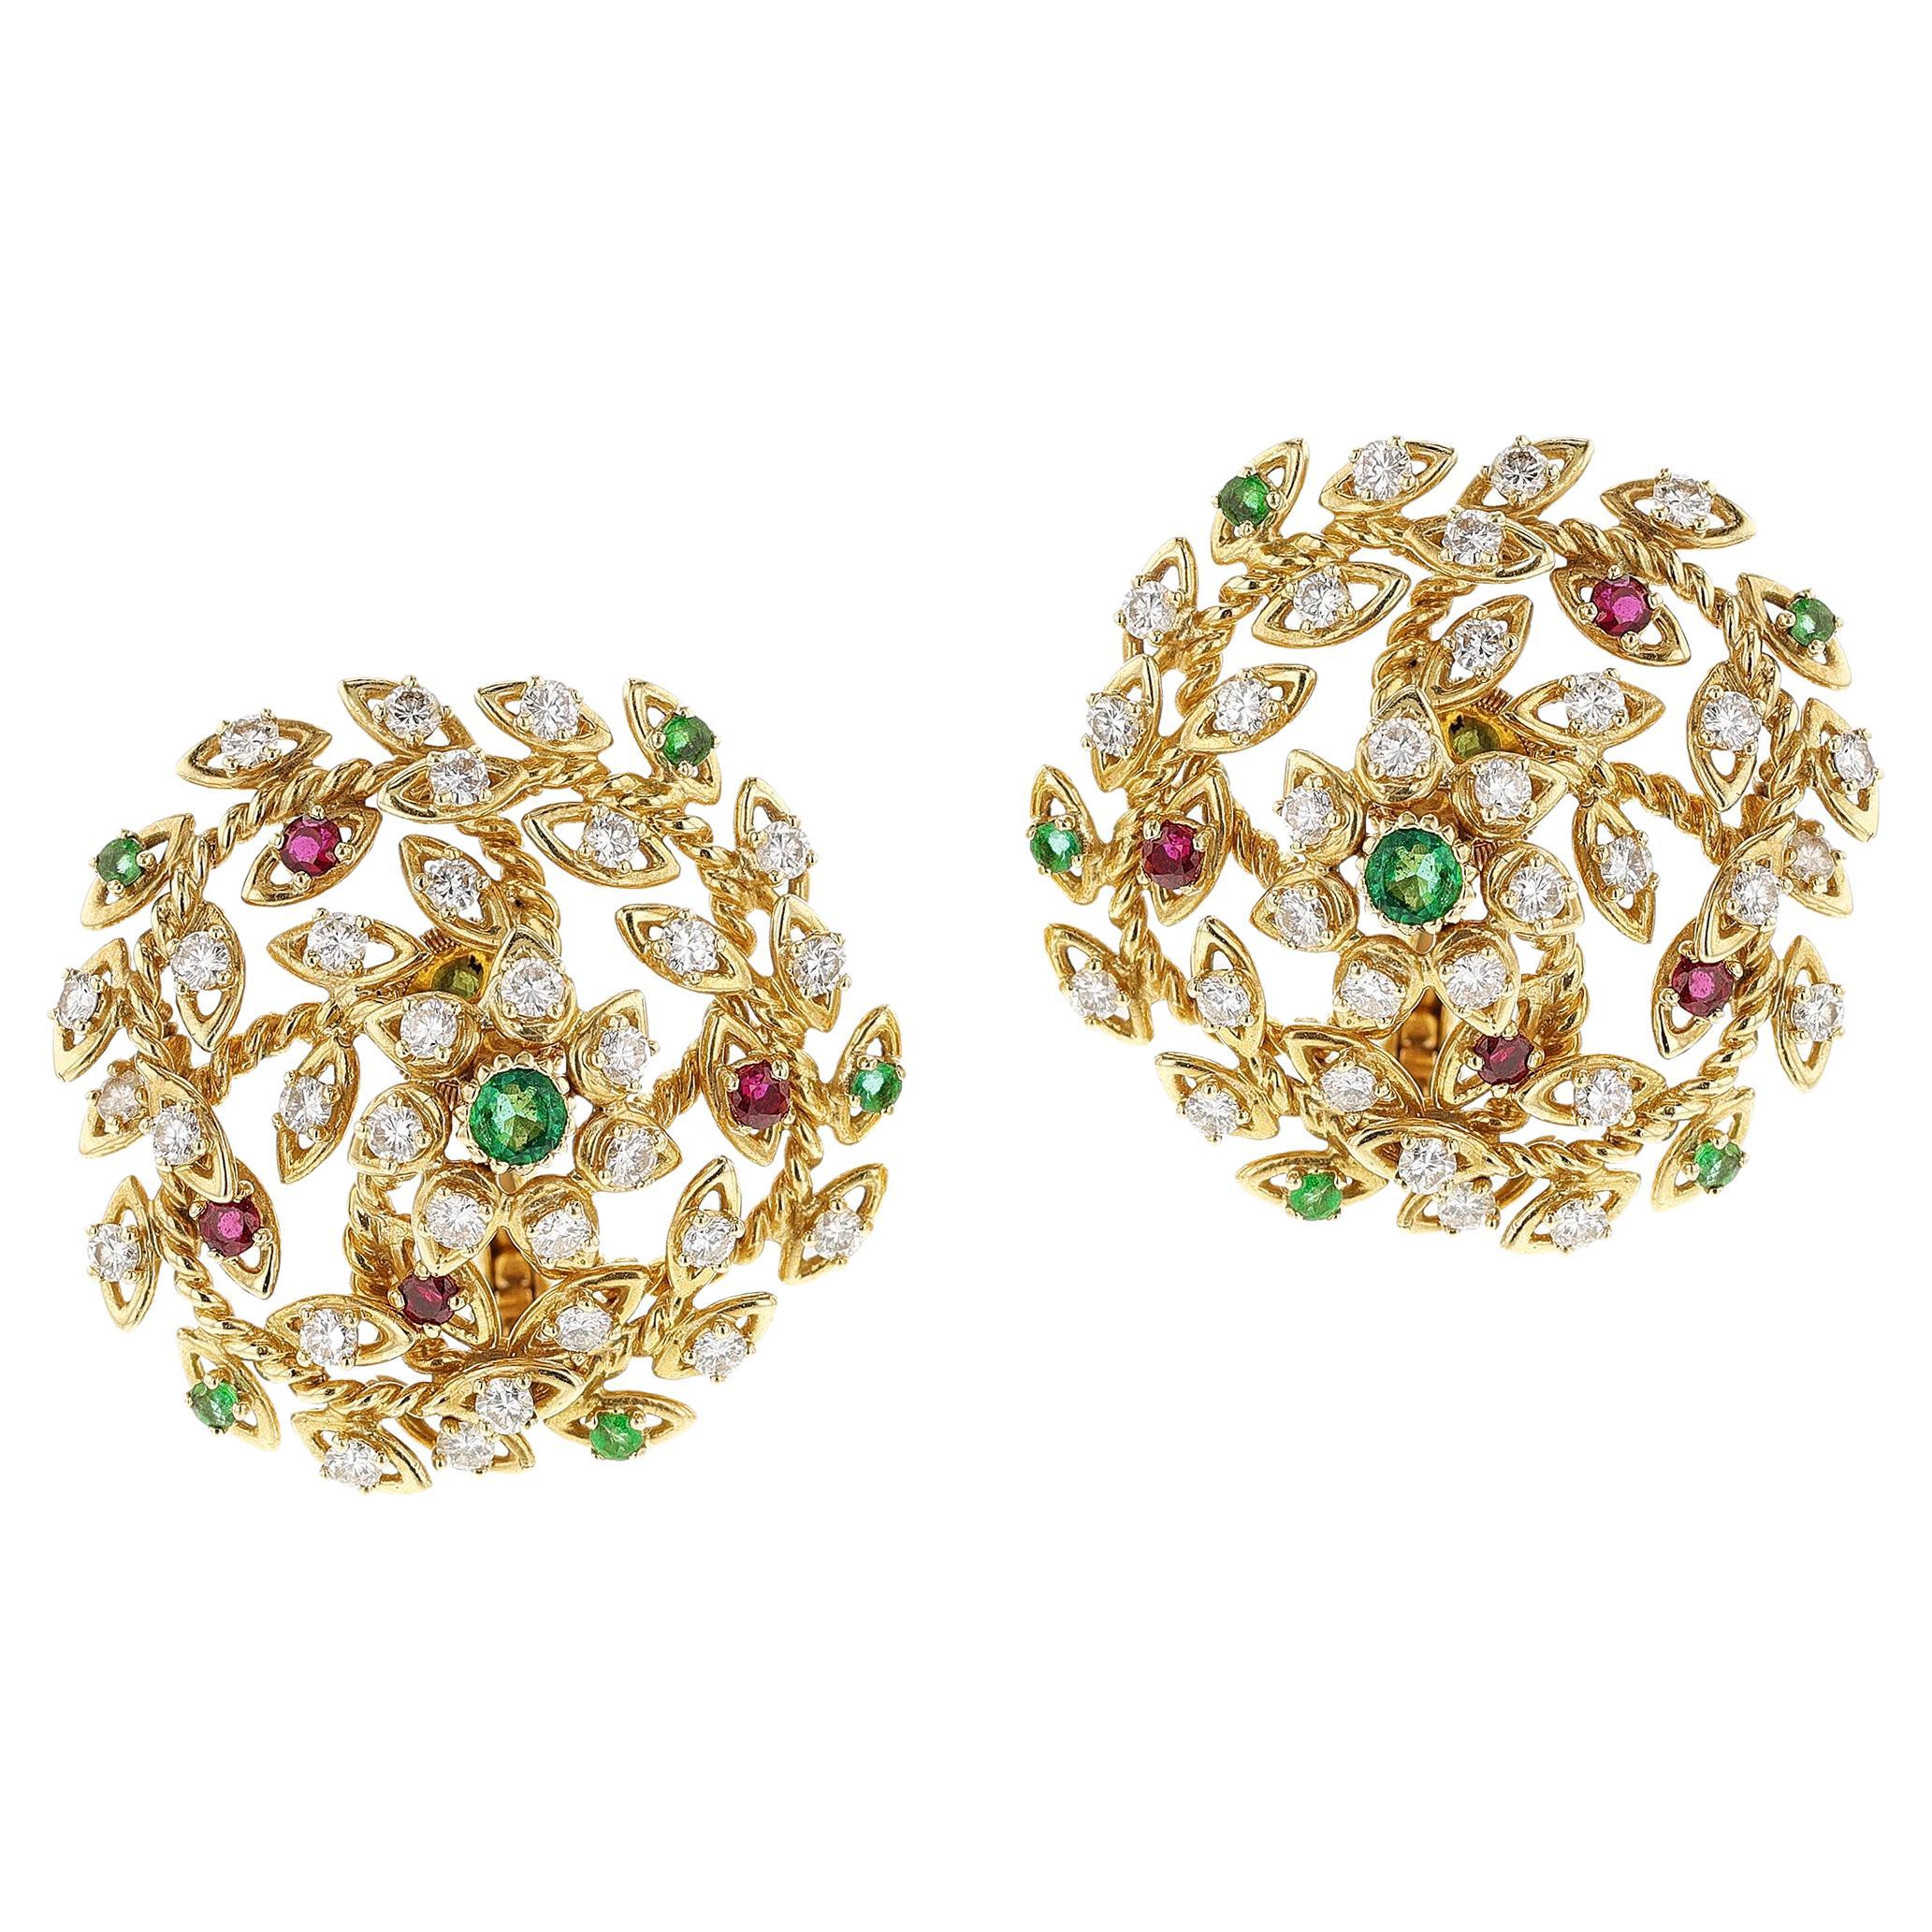 Cartier Paris Diamond, Emerald, Ruby Earrings, 18k 